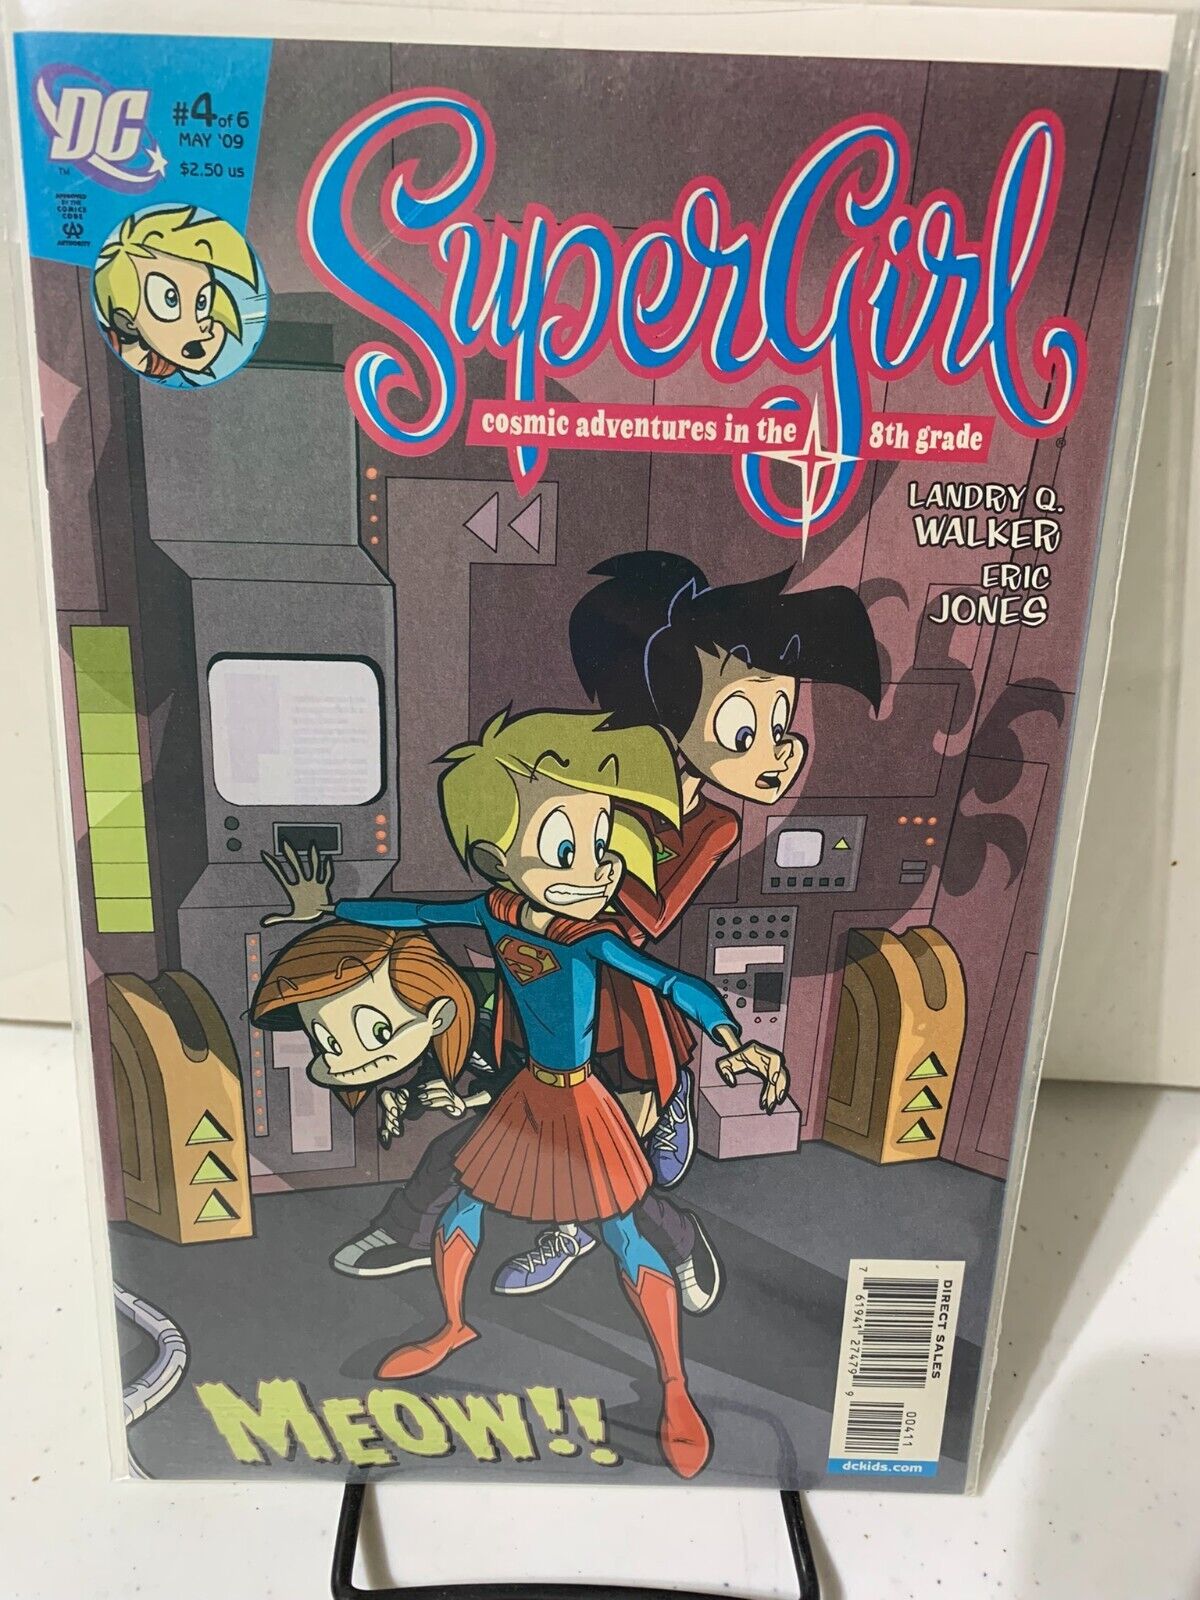 Supergirl Cosmic Adventures in the 8th Grade #4 2009 - New Unread - VF/NM